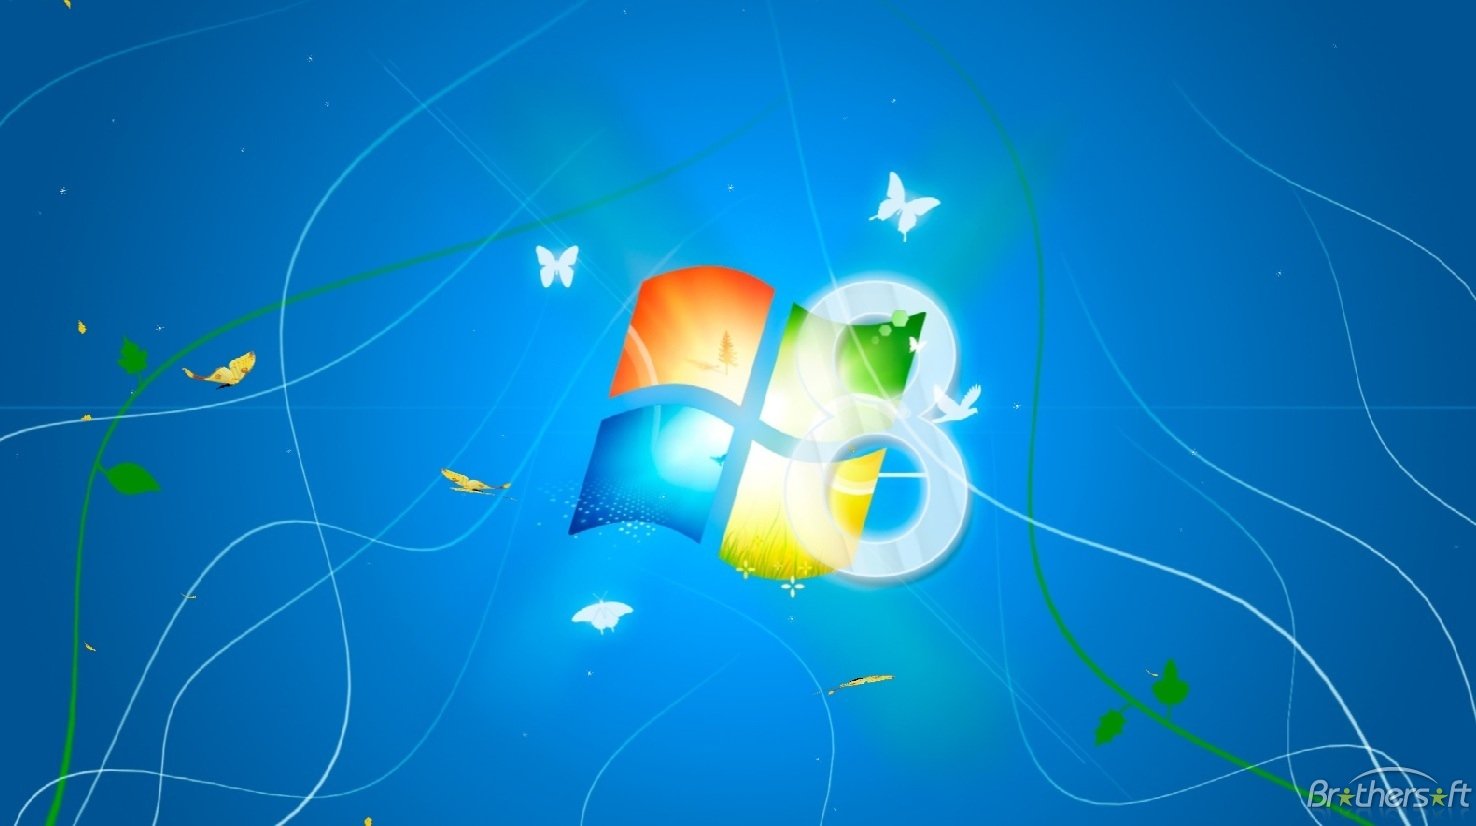  Windows 8 Light Animated Wallpaper Windows 8 Light Animated Wallpaper